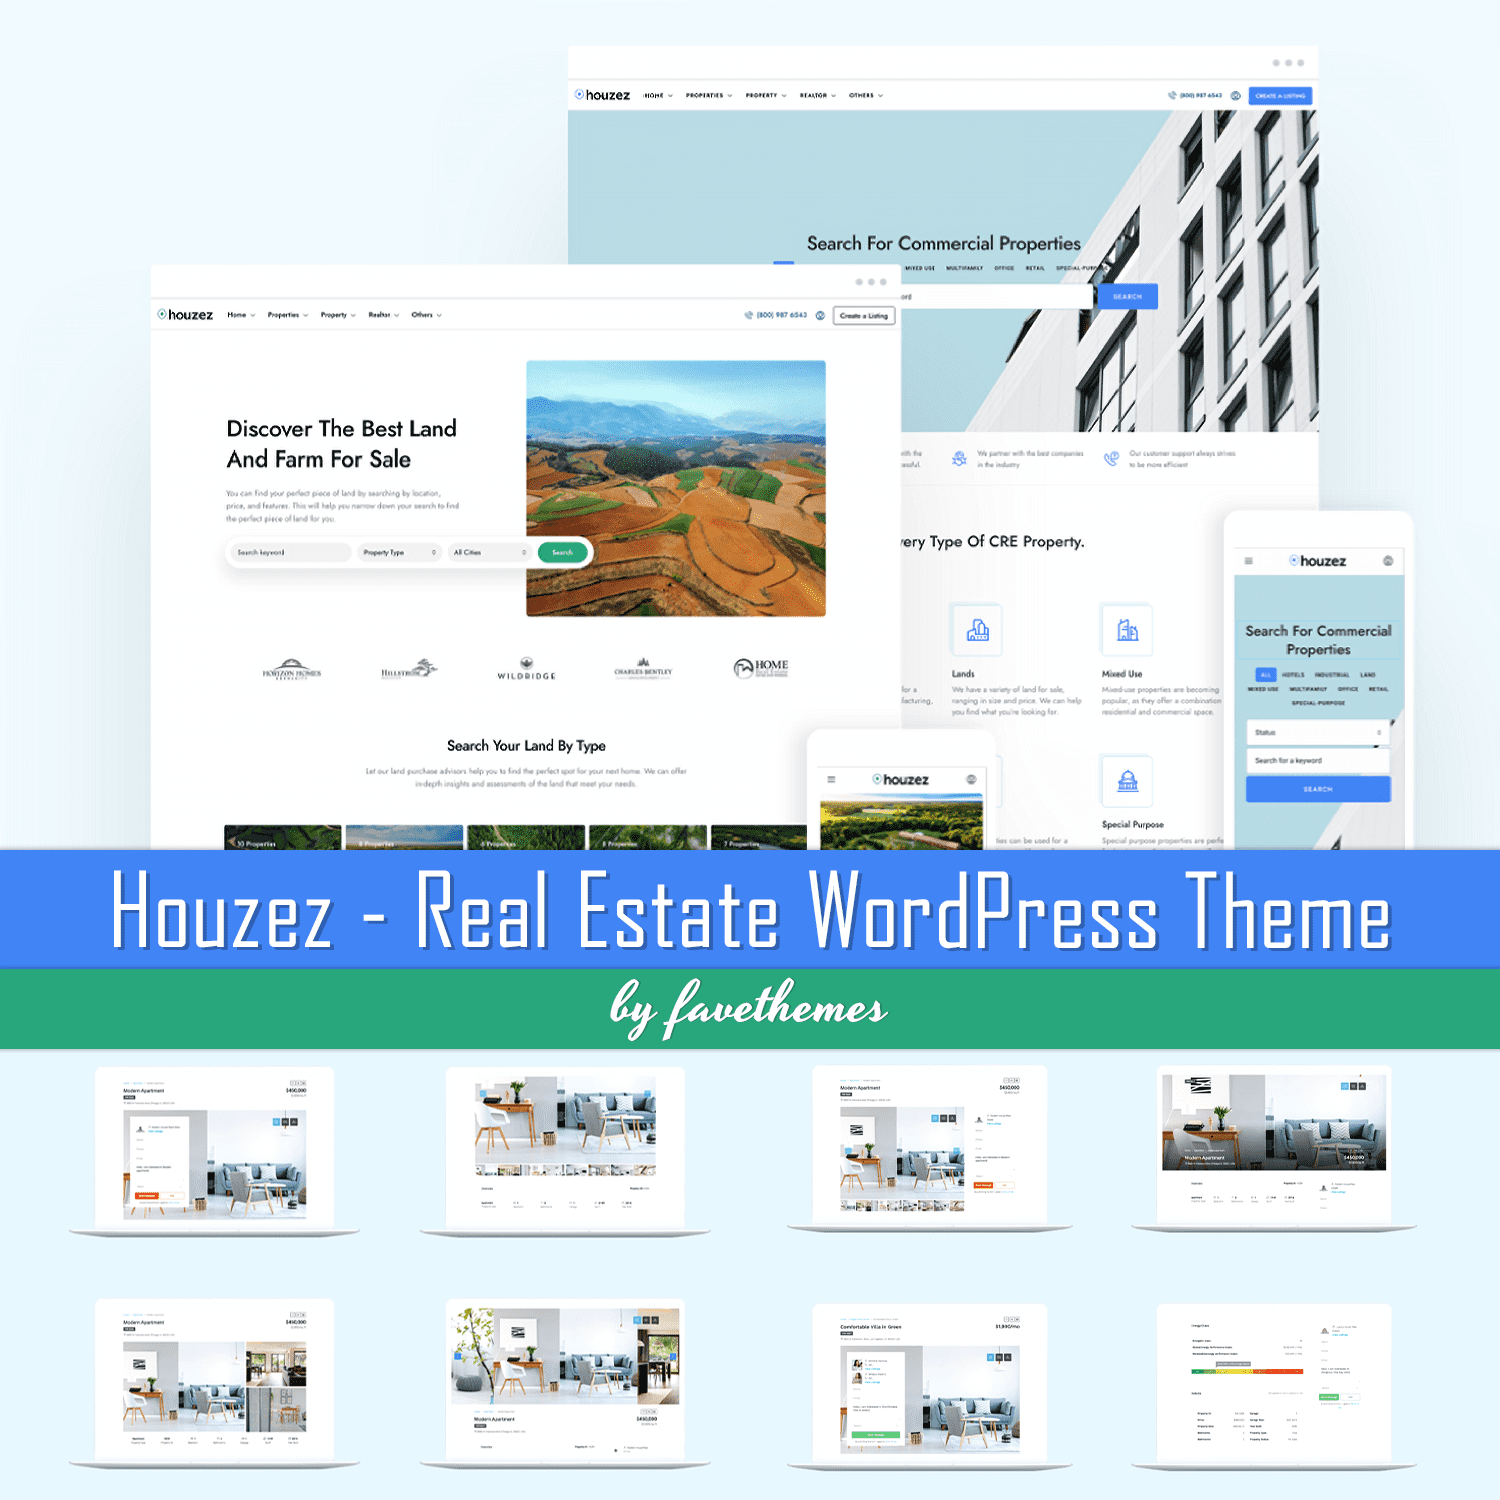 Houzez - Real Estate WordPress Theme cover.